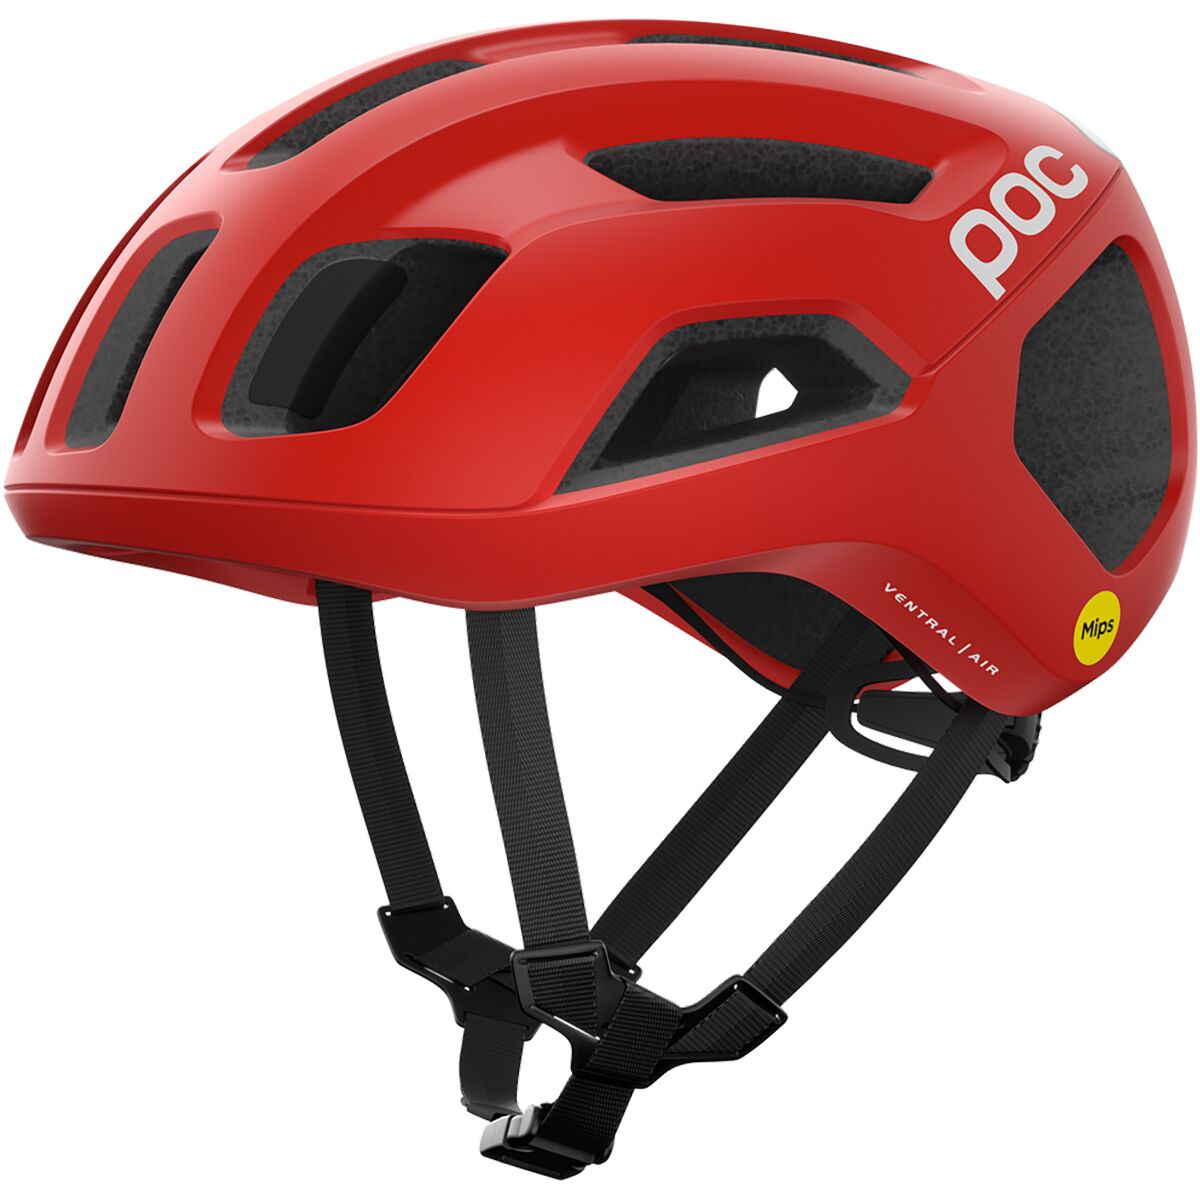 Photos - Protective Gear Set ROS Ventral Air Mips Helmet 